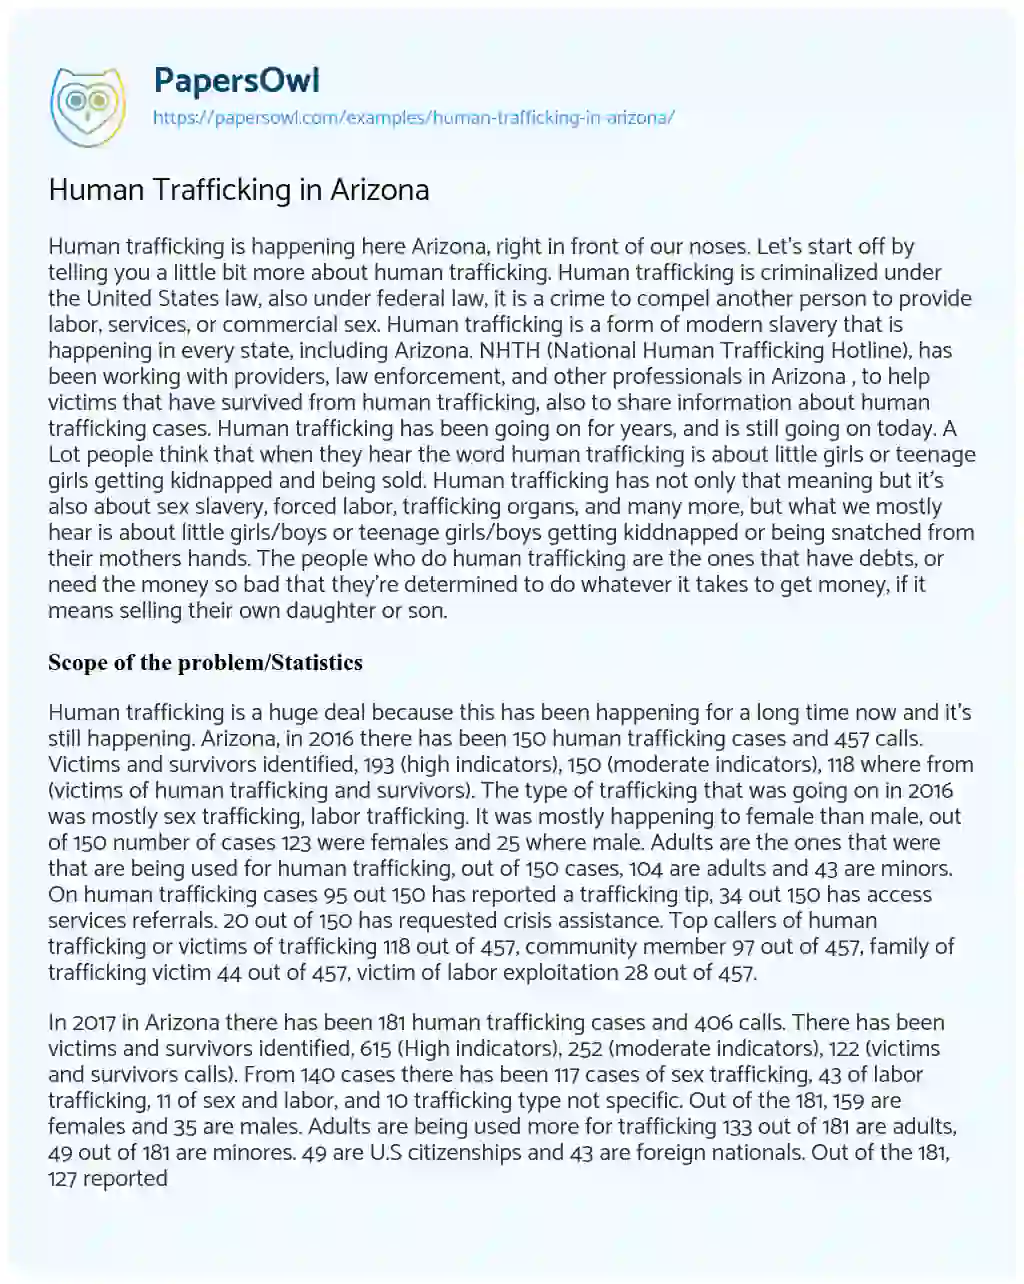 Human Trafficking in Arizona essay